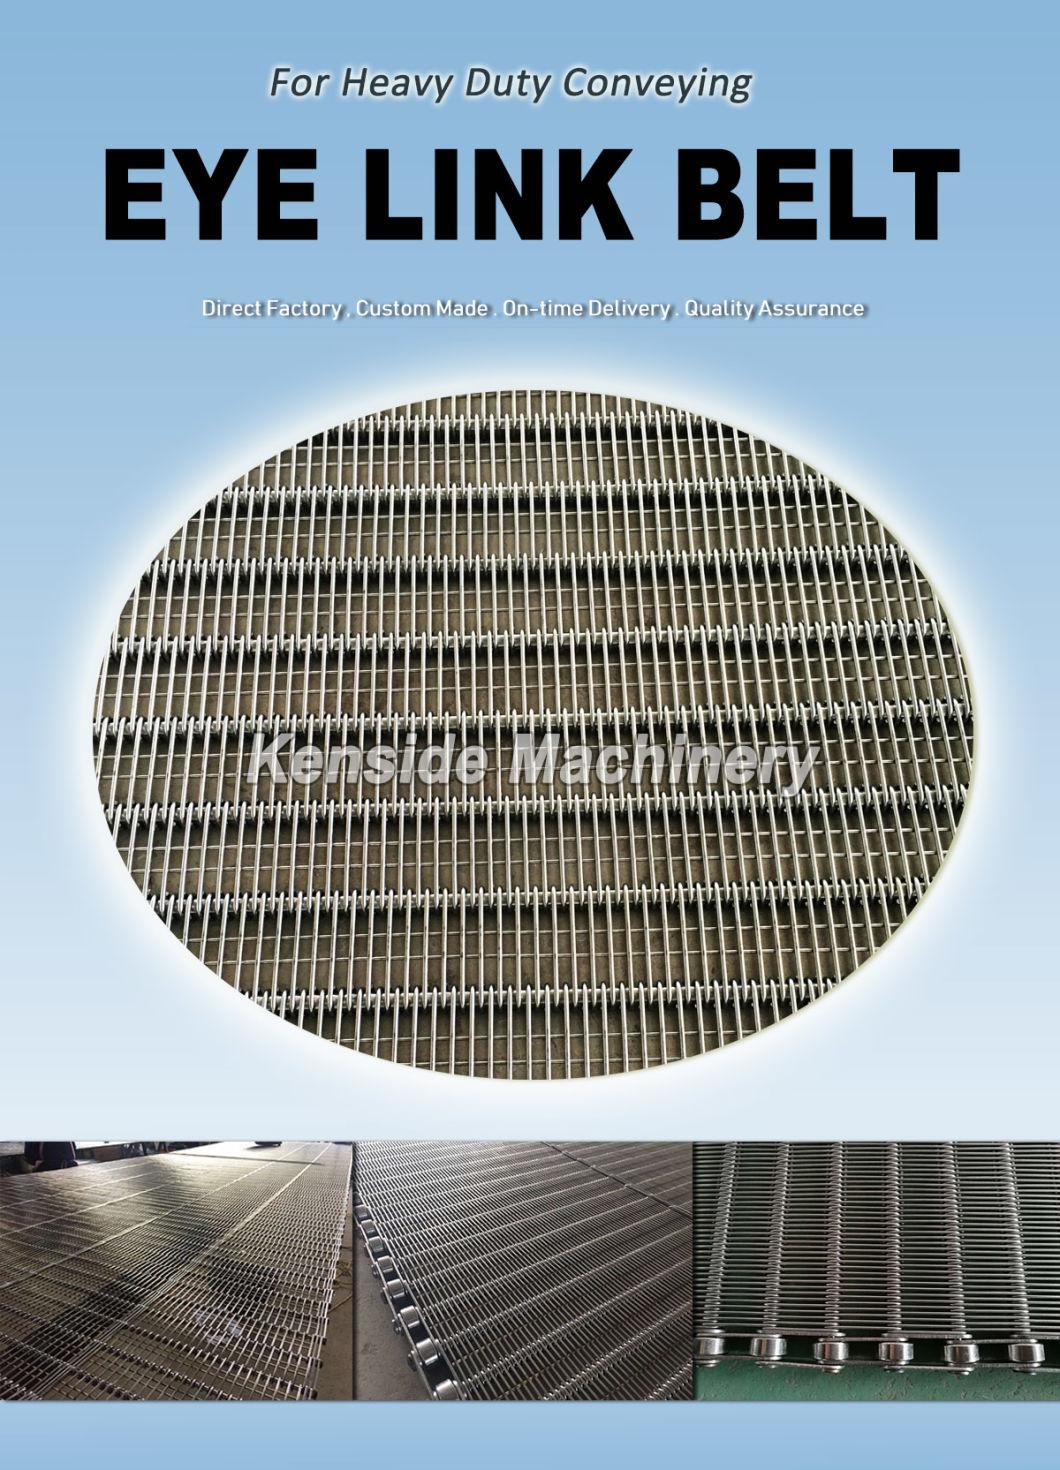 High Quality Chain Conveyor Eye Link Belt